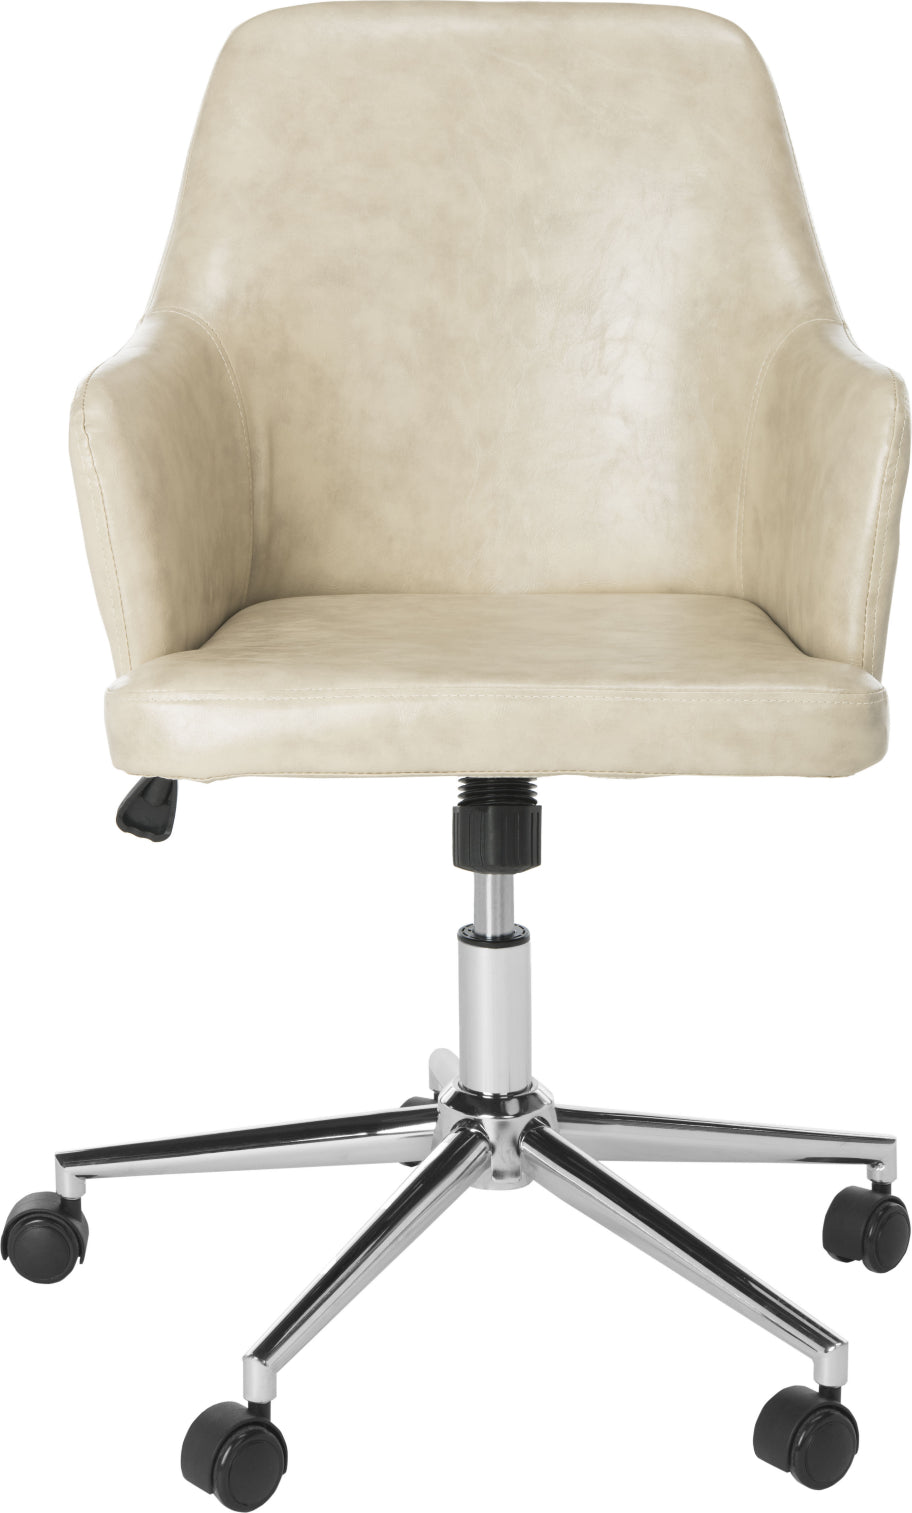 Safavieh Cadence Swivel Office Chair Beige and Chrome Furniture main image